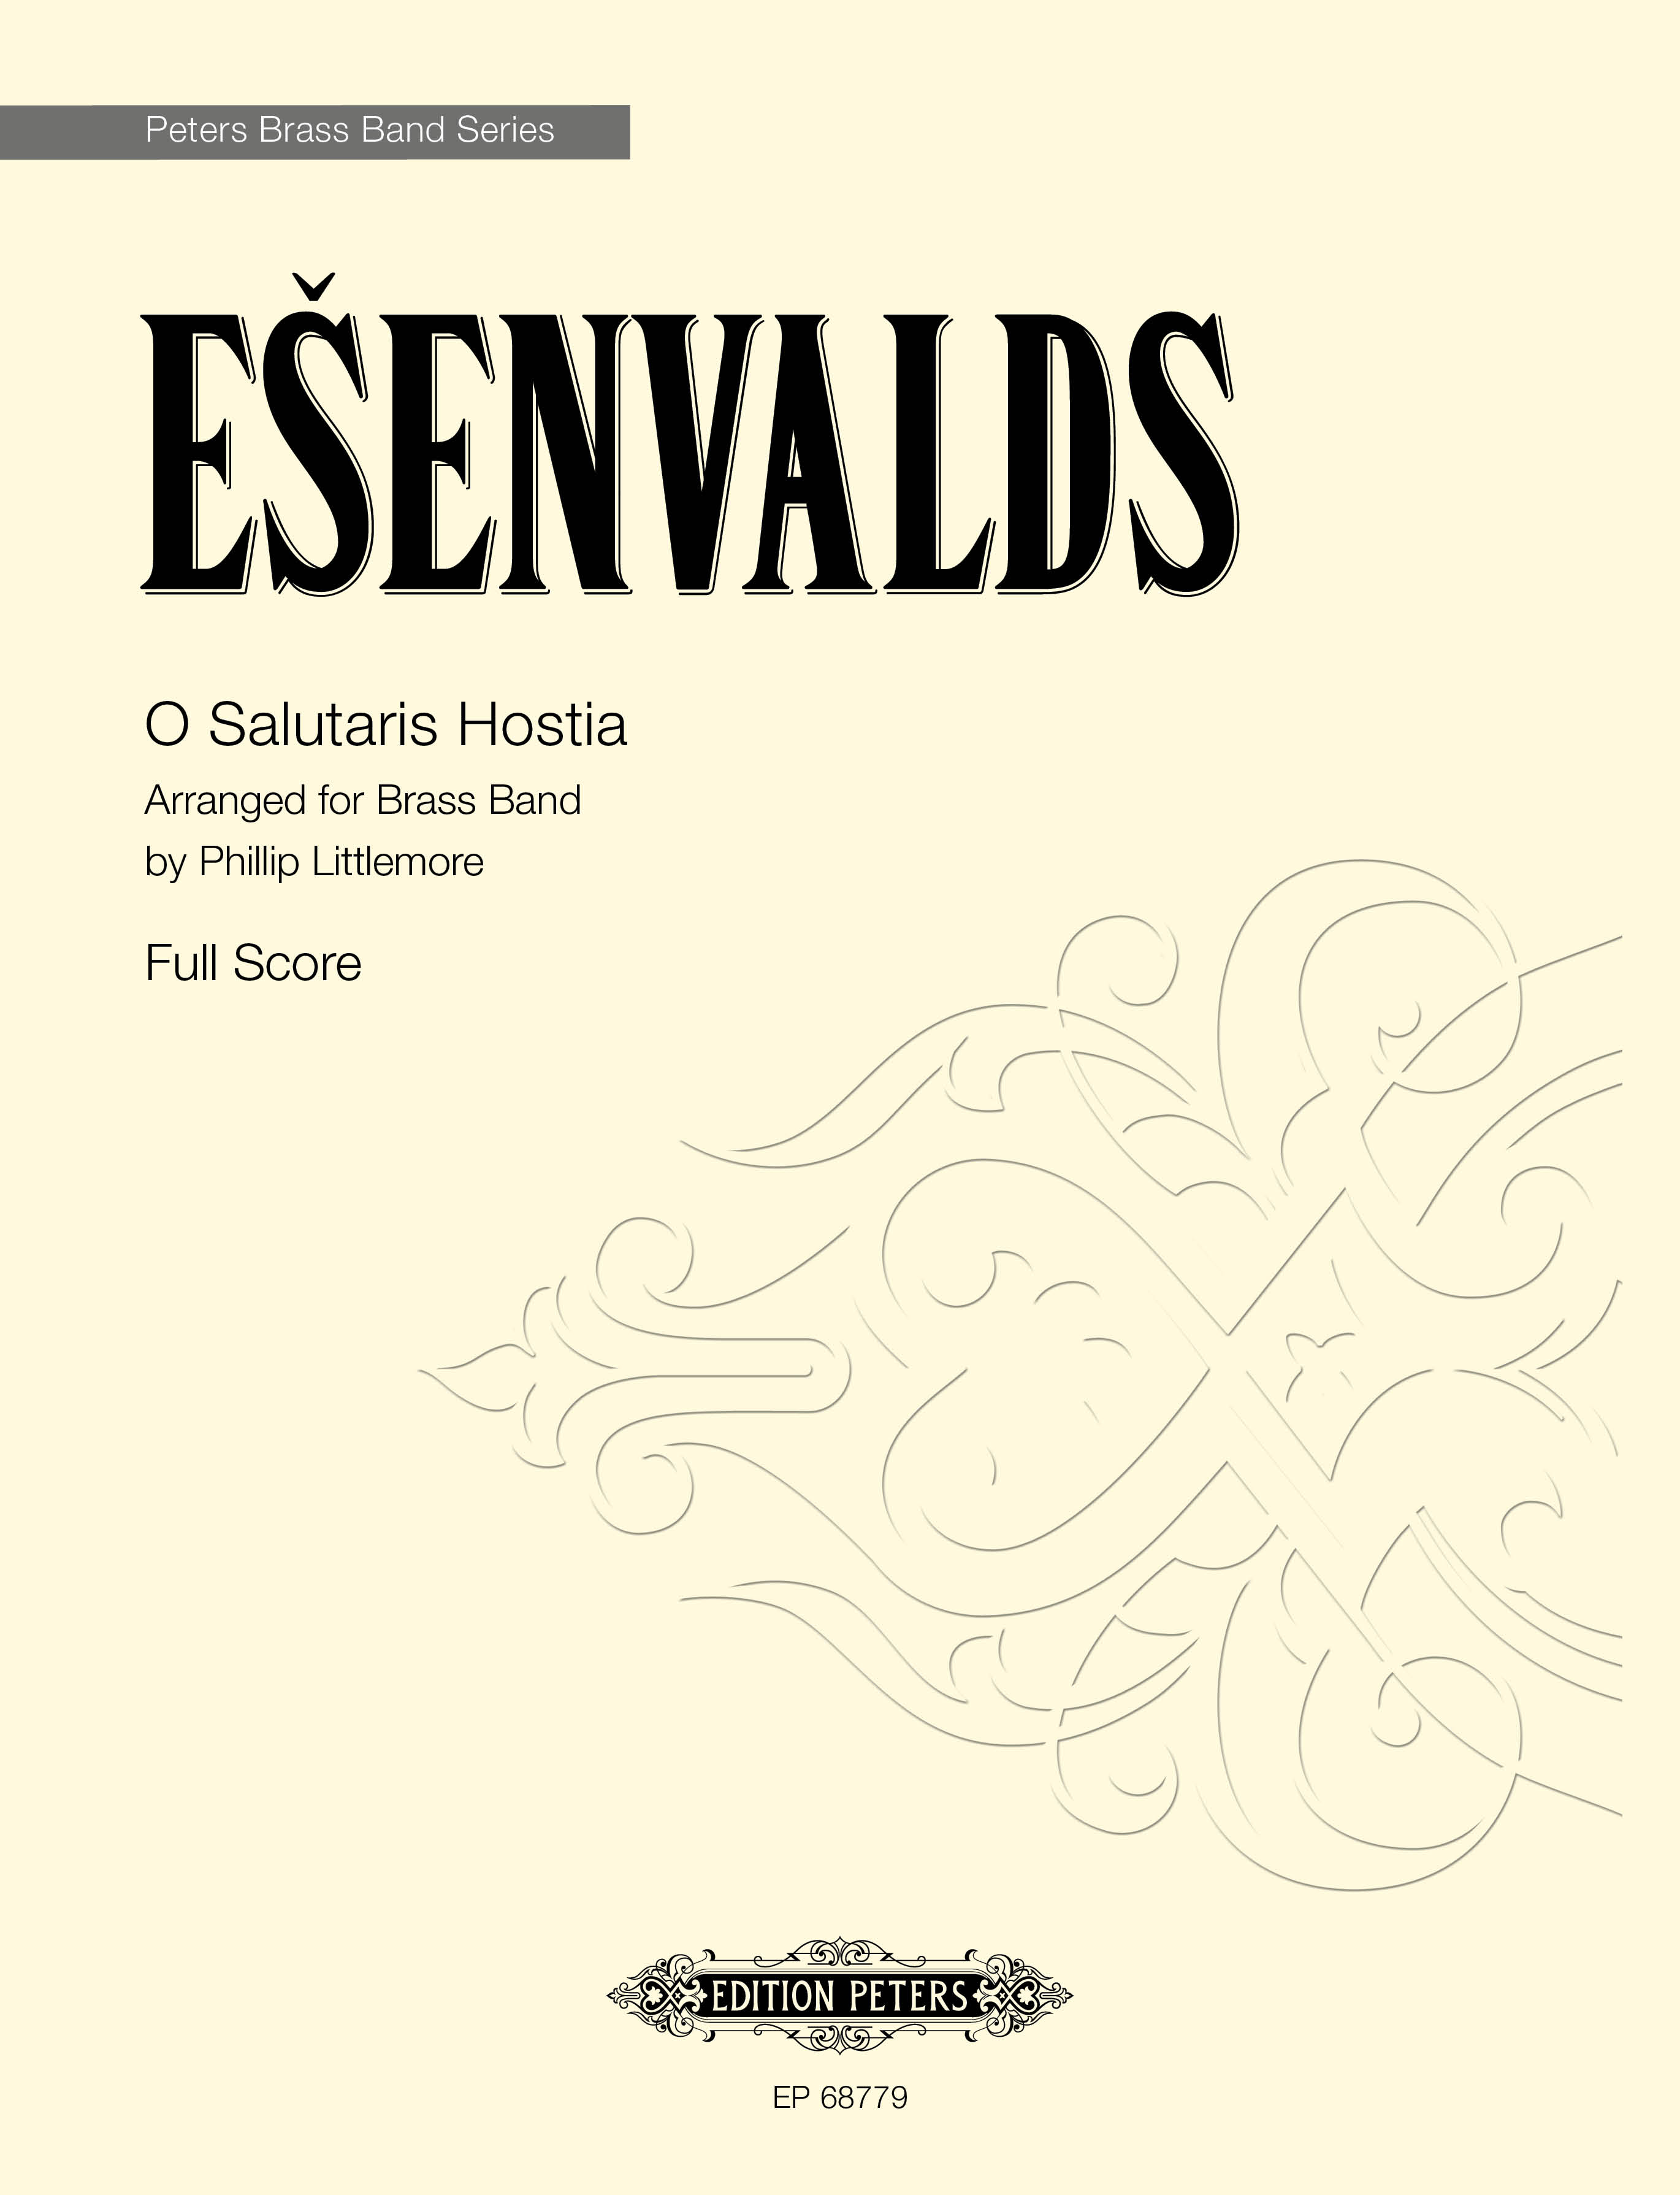 Esenvalds O Salutaris Hostia Brass Band Score Sheet Music Songbook